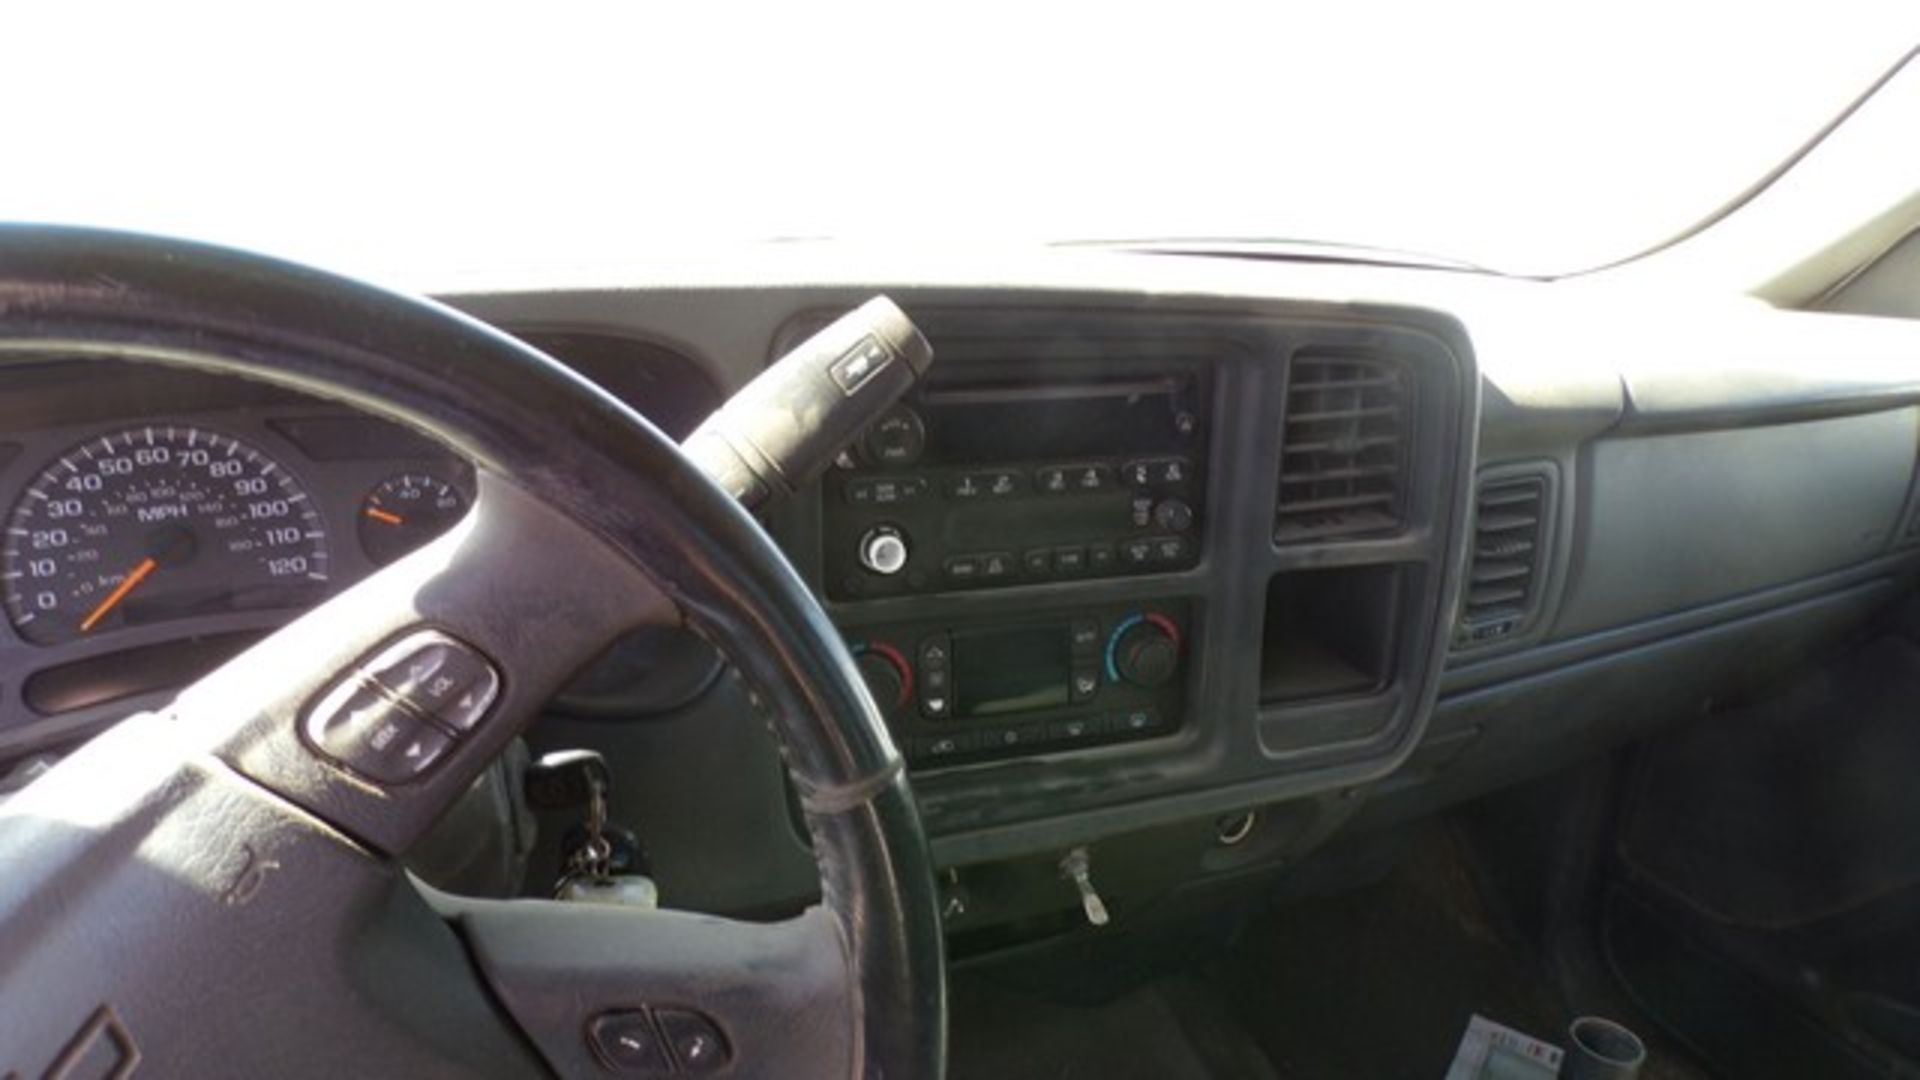 Located in YARD 1 - Midland, TX (2438) (X) 2006 CHEVROLET 2500HD LT CREW CAB FLATBED TRUCK, VIN- - Bild 7 aus 8